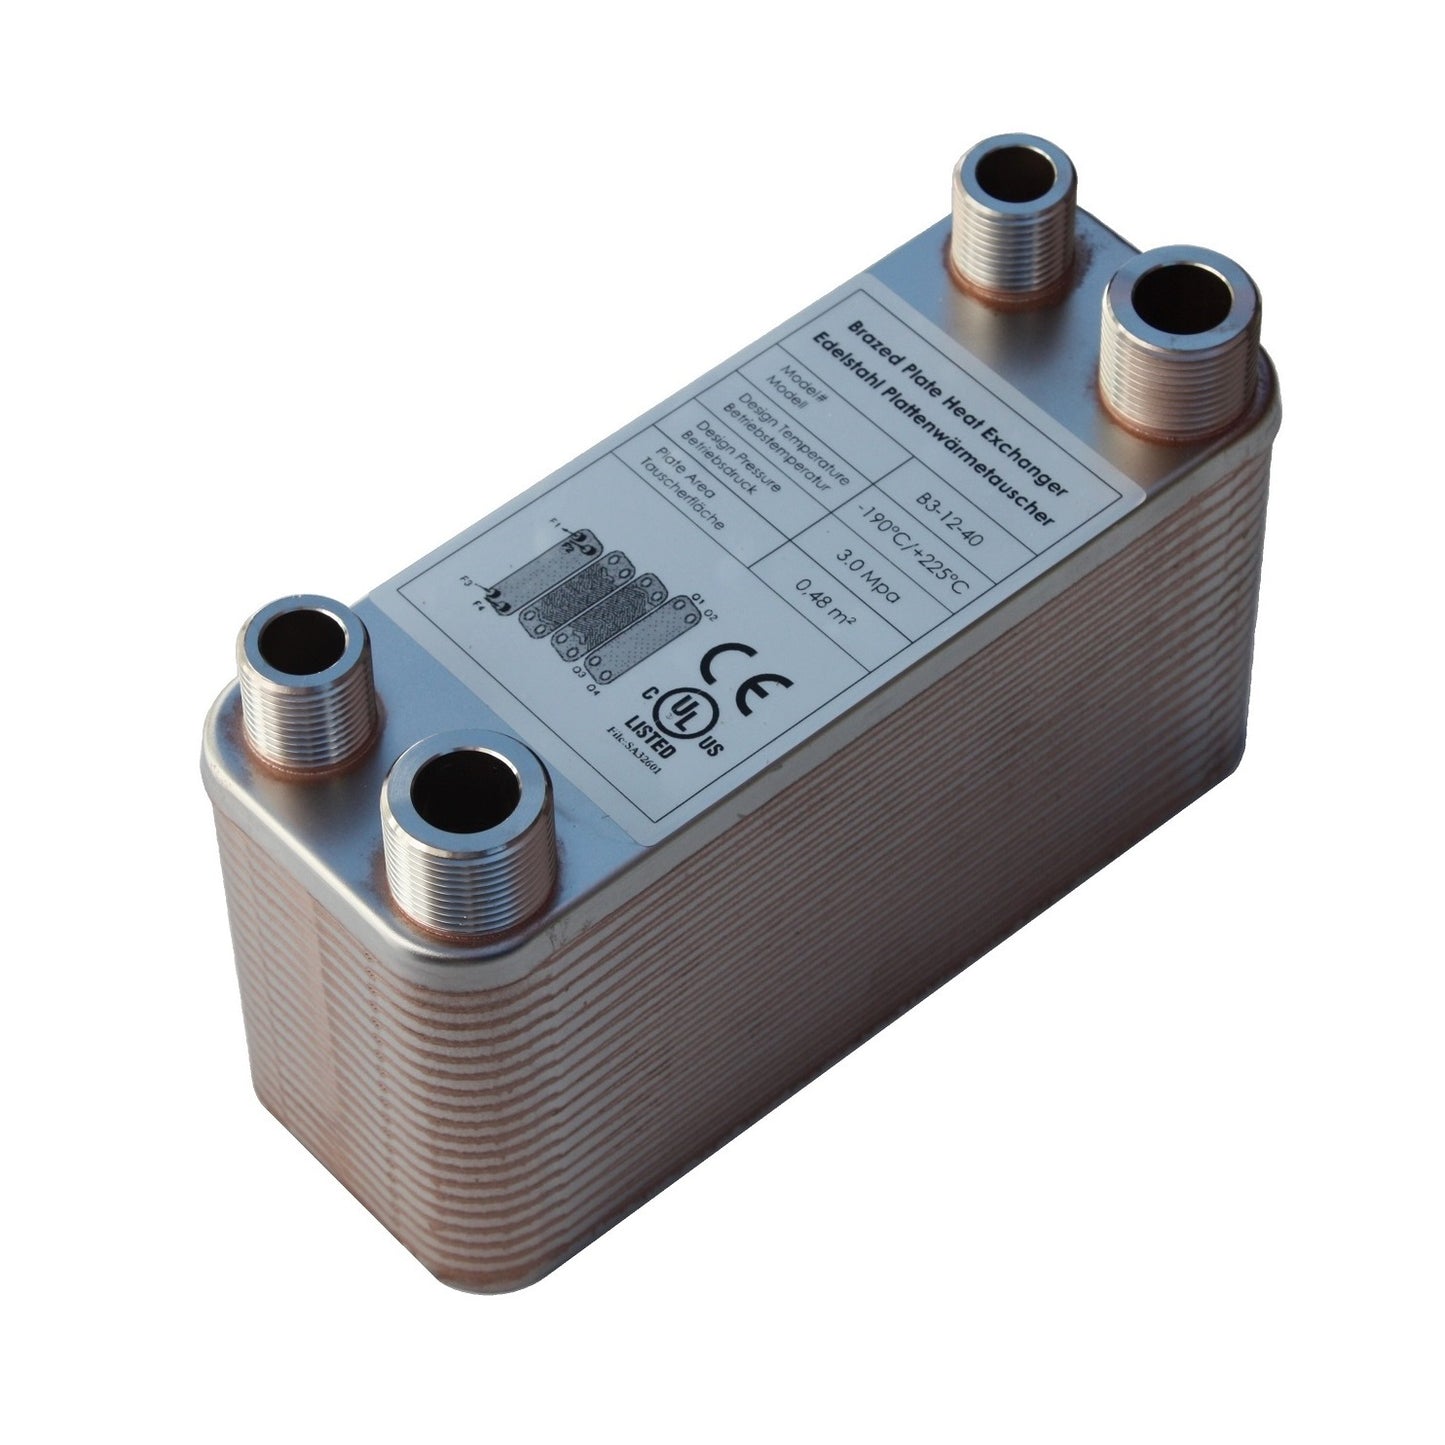 Intercambiador de calor de placas B3-12-40 - 80kW, 40 placas